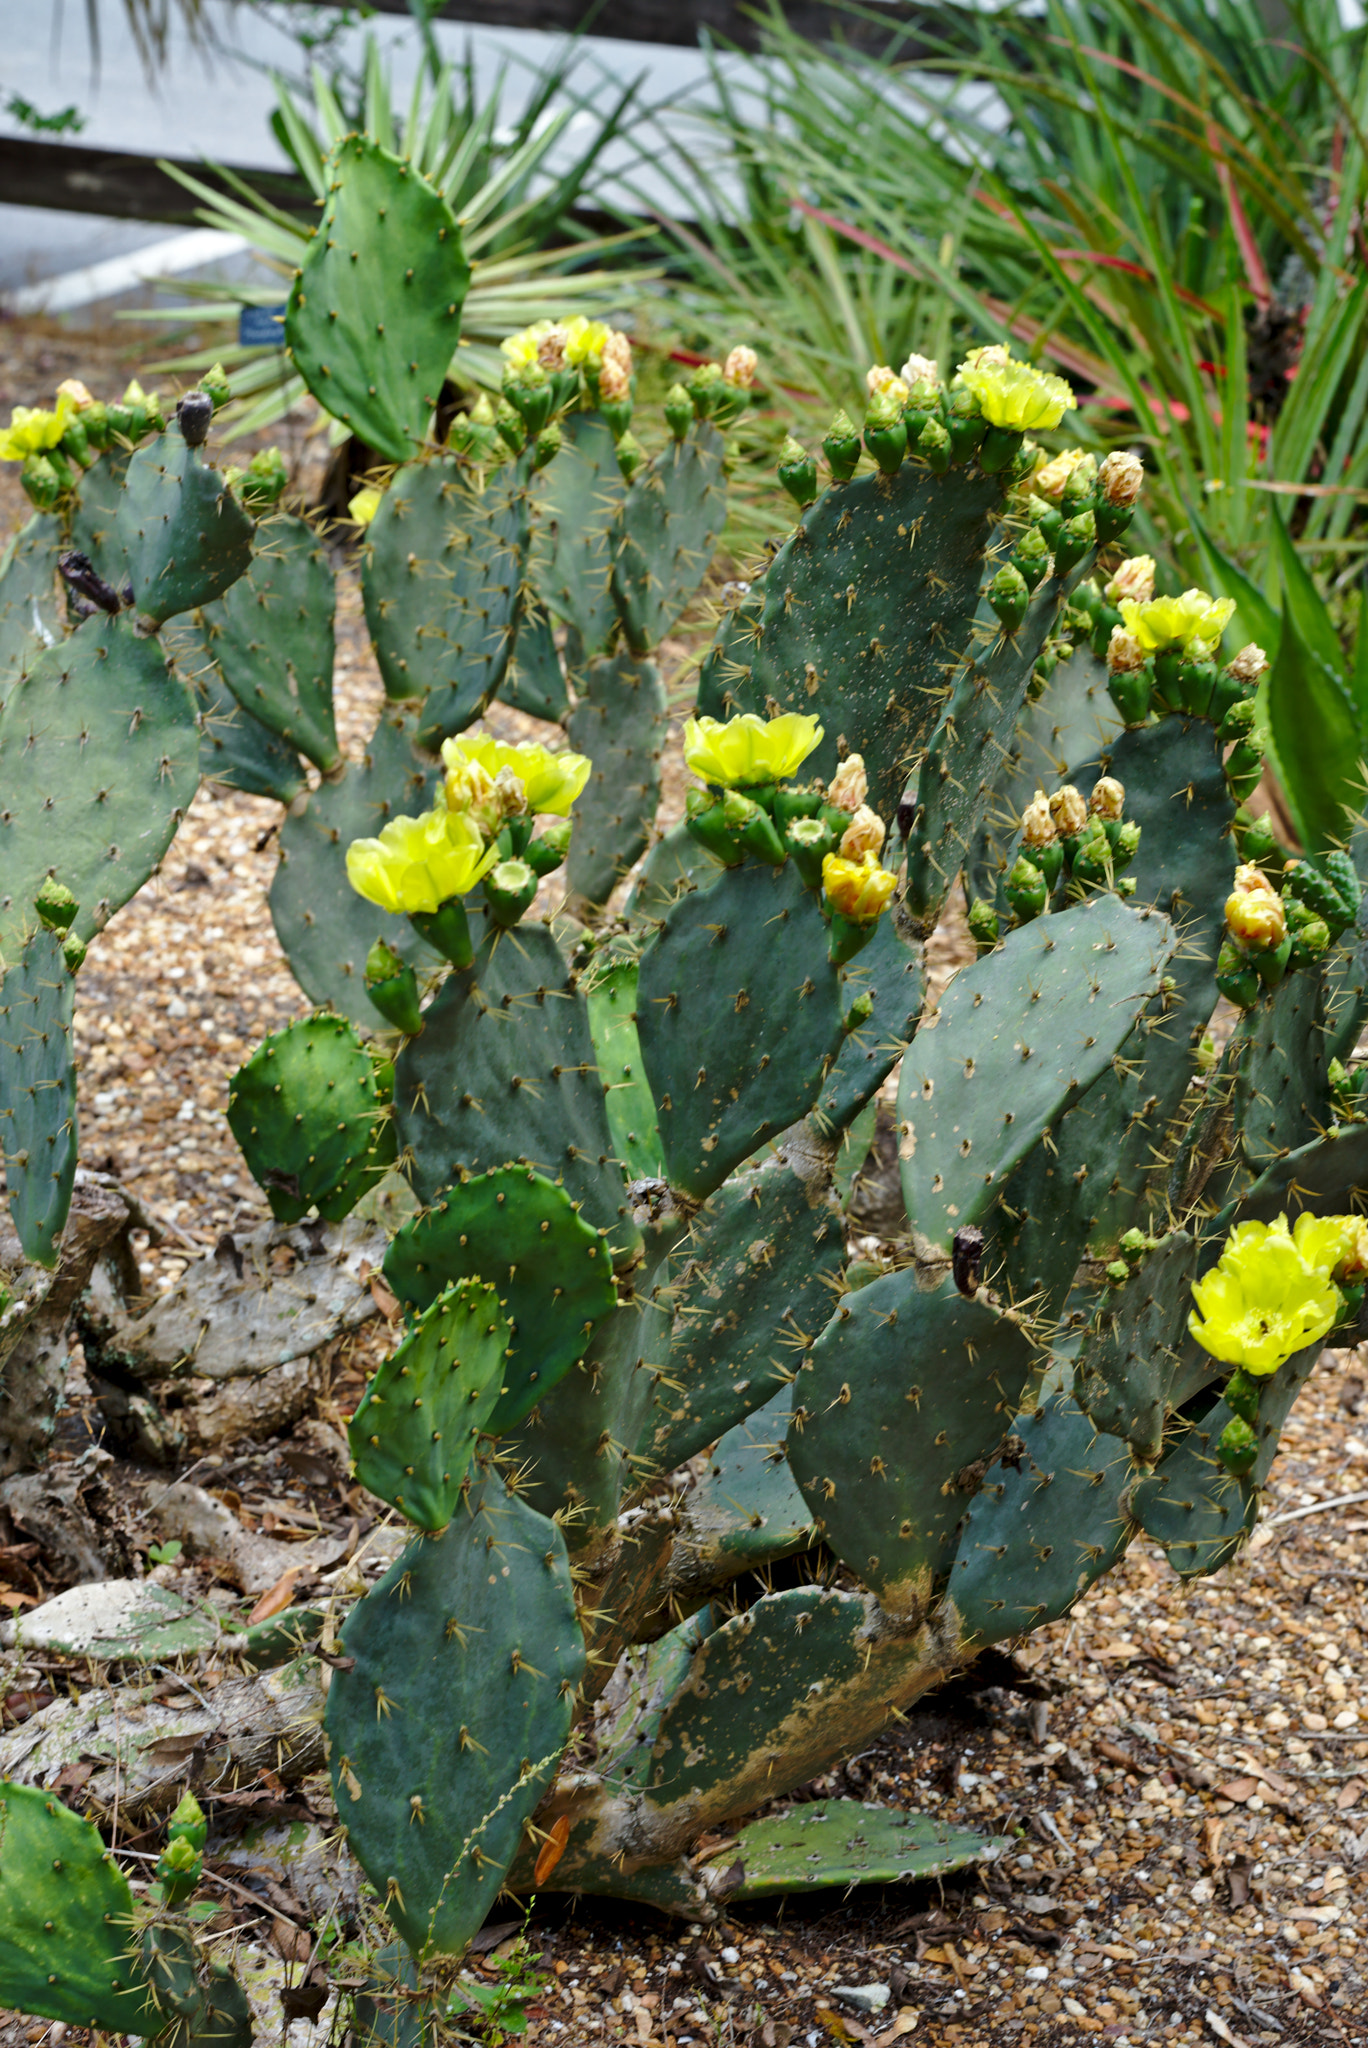 ZEISS Otus 85mm F1.4 sample photo. Flowering opuntia cacti photography